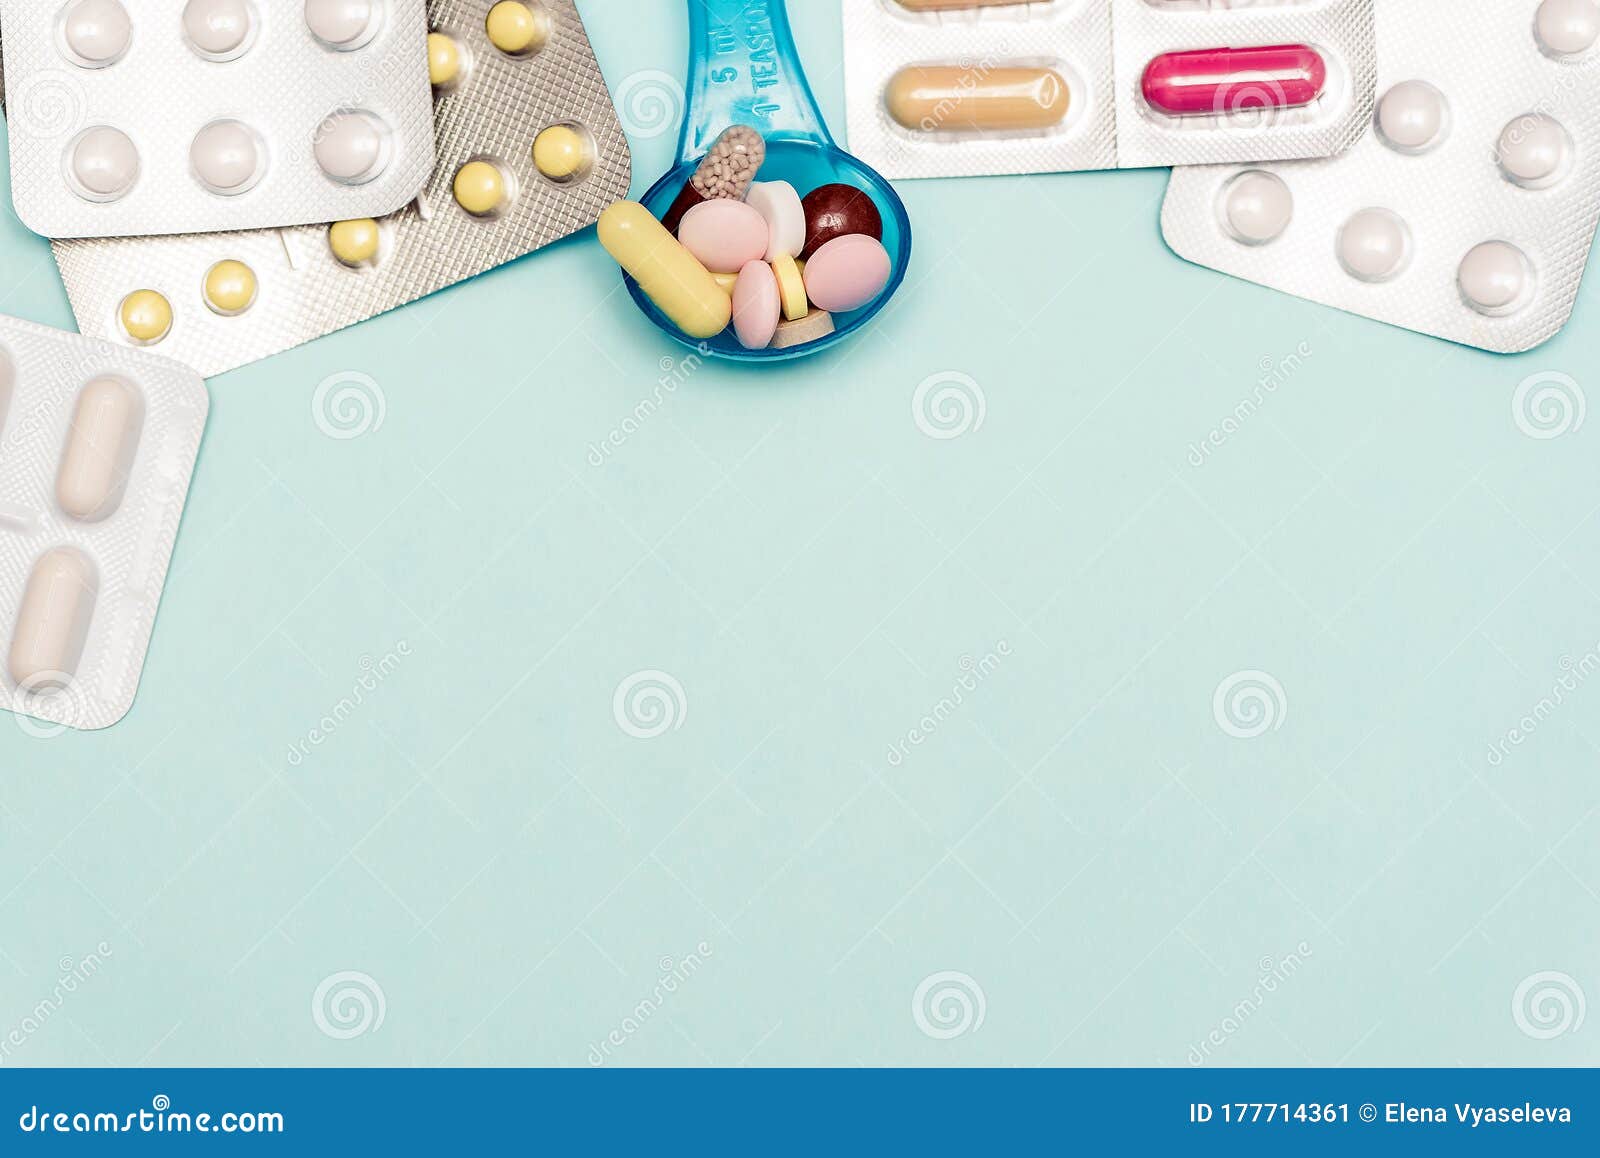 medicine pills on on blue backdrop. copy space